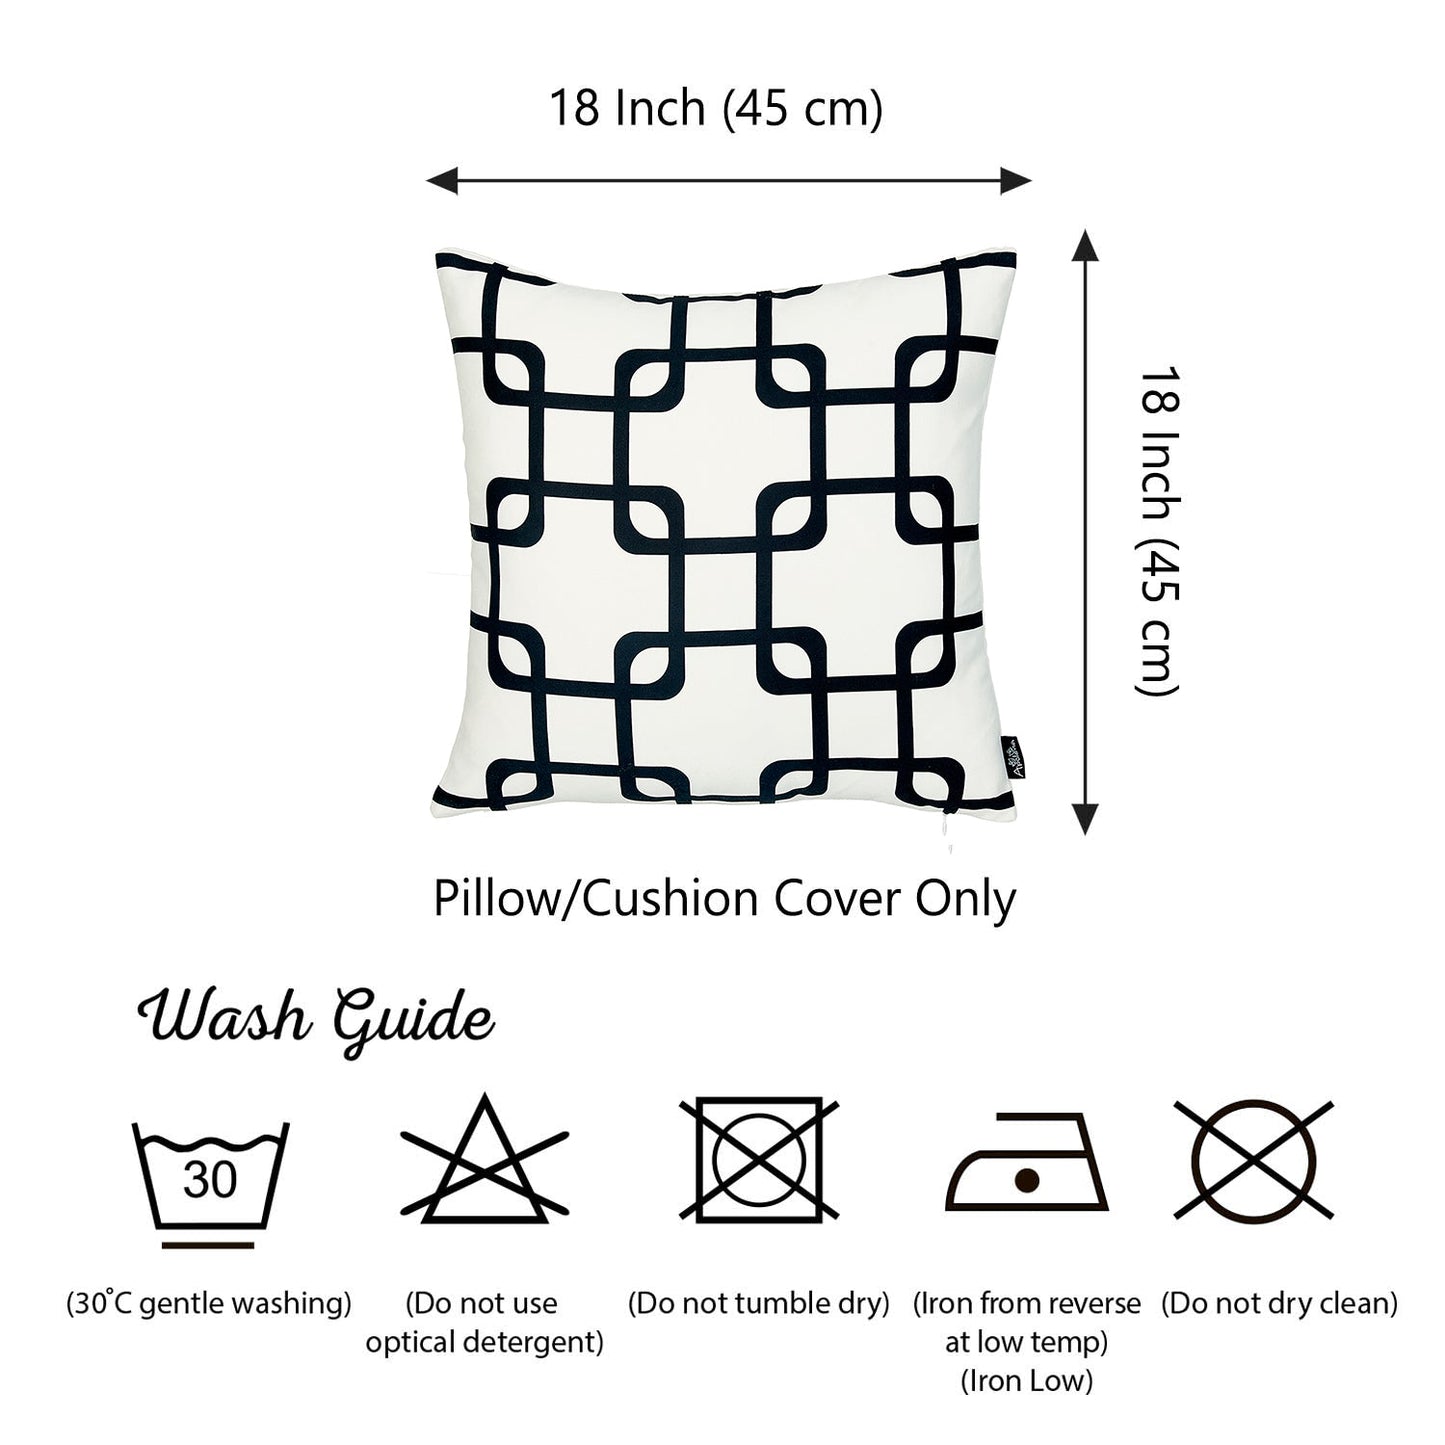 Geometric Black Squares Square 18" Throw Pillow Cover (Set of 2)